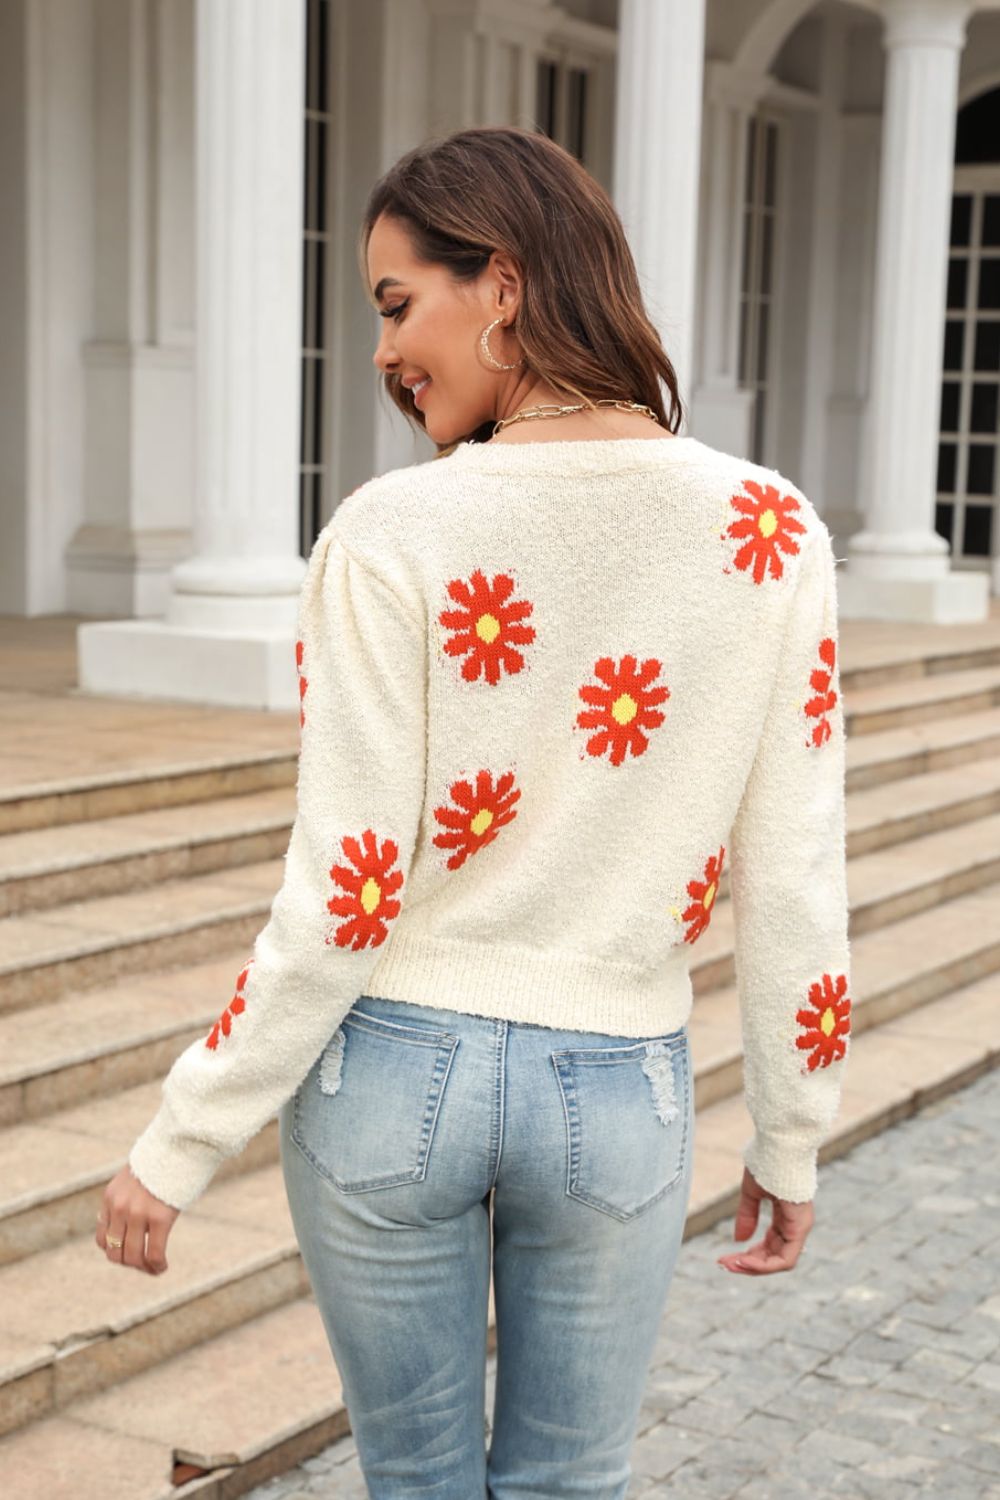 Retro Daisy Soft Knit Flower Long Sleeve Pullover Sweater Shirt